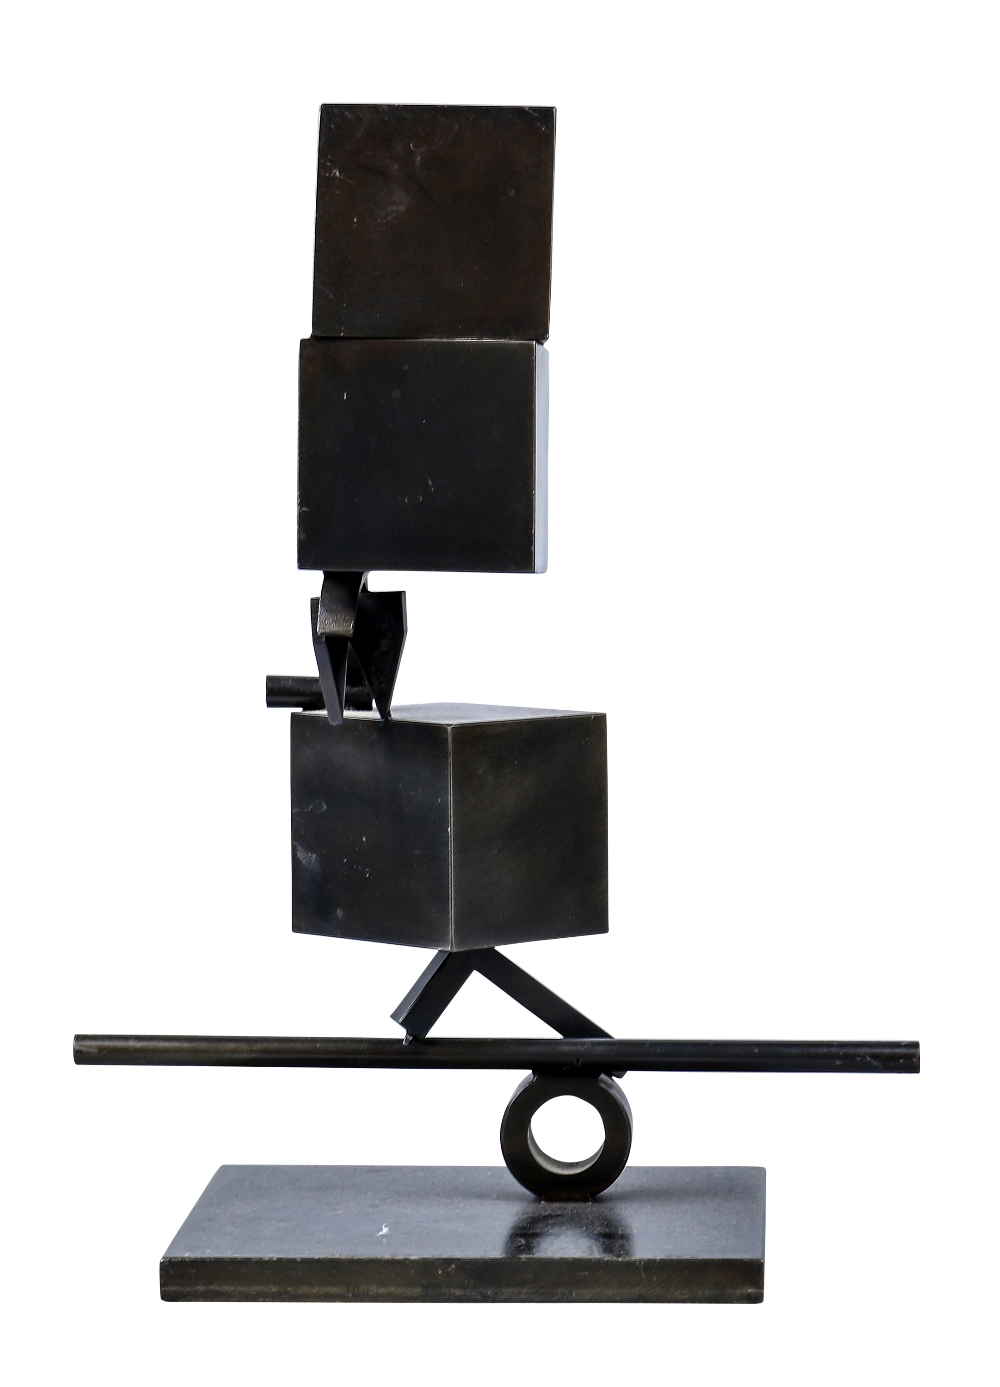 Fletcher Benton (American, b. 1931), Blocks on Blocks, 1996, steel sculpture, signed and dated at